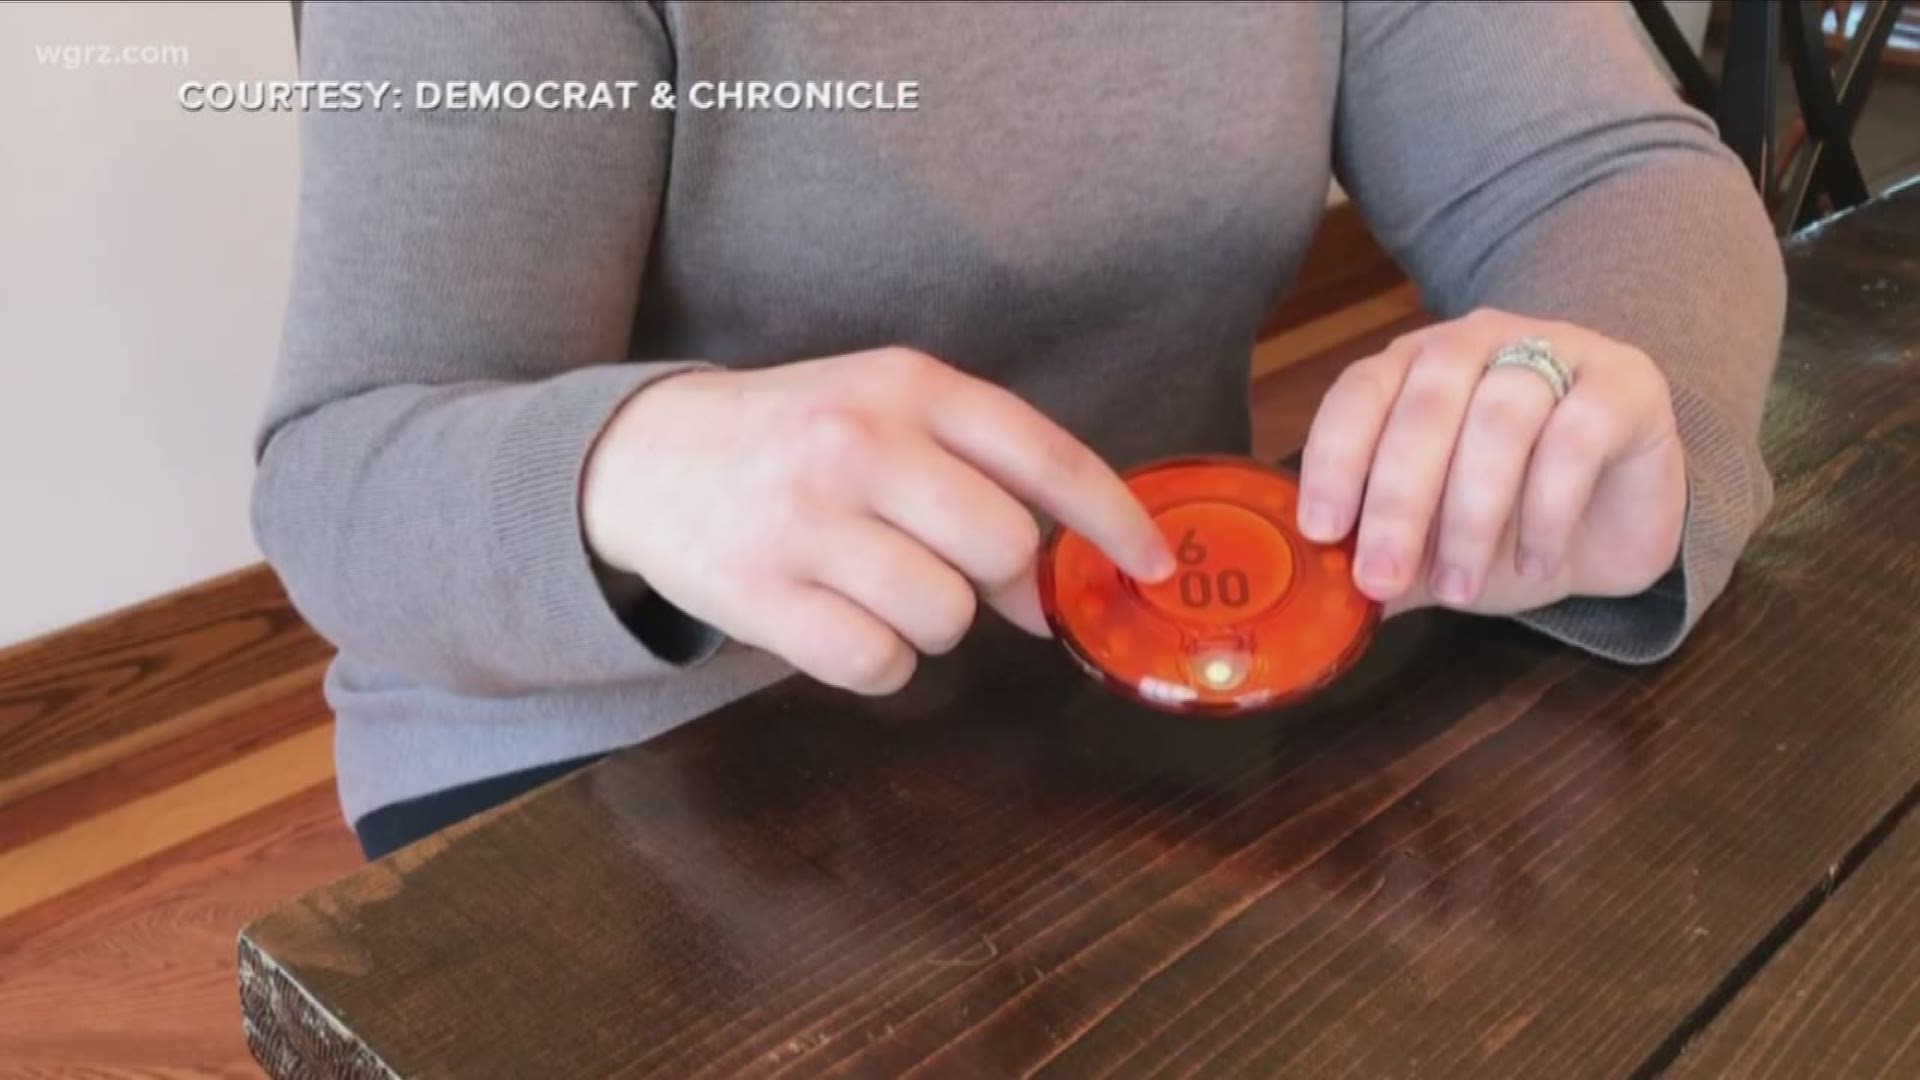 Rochester couple invents opioid dispenser